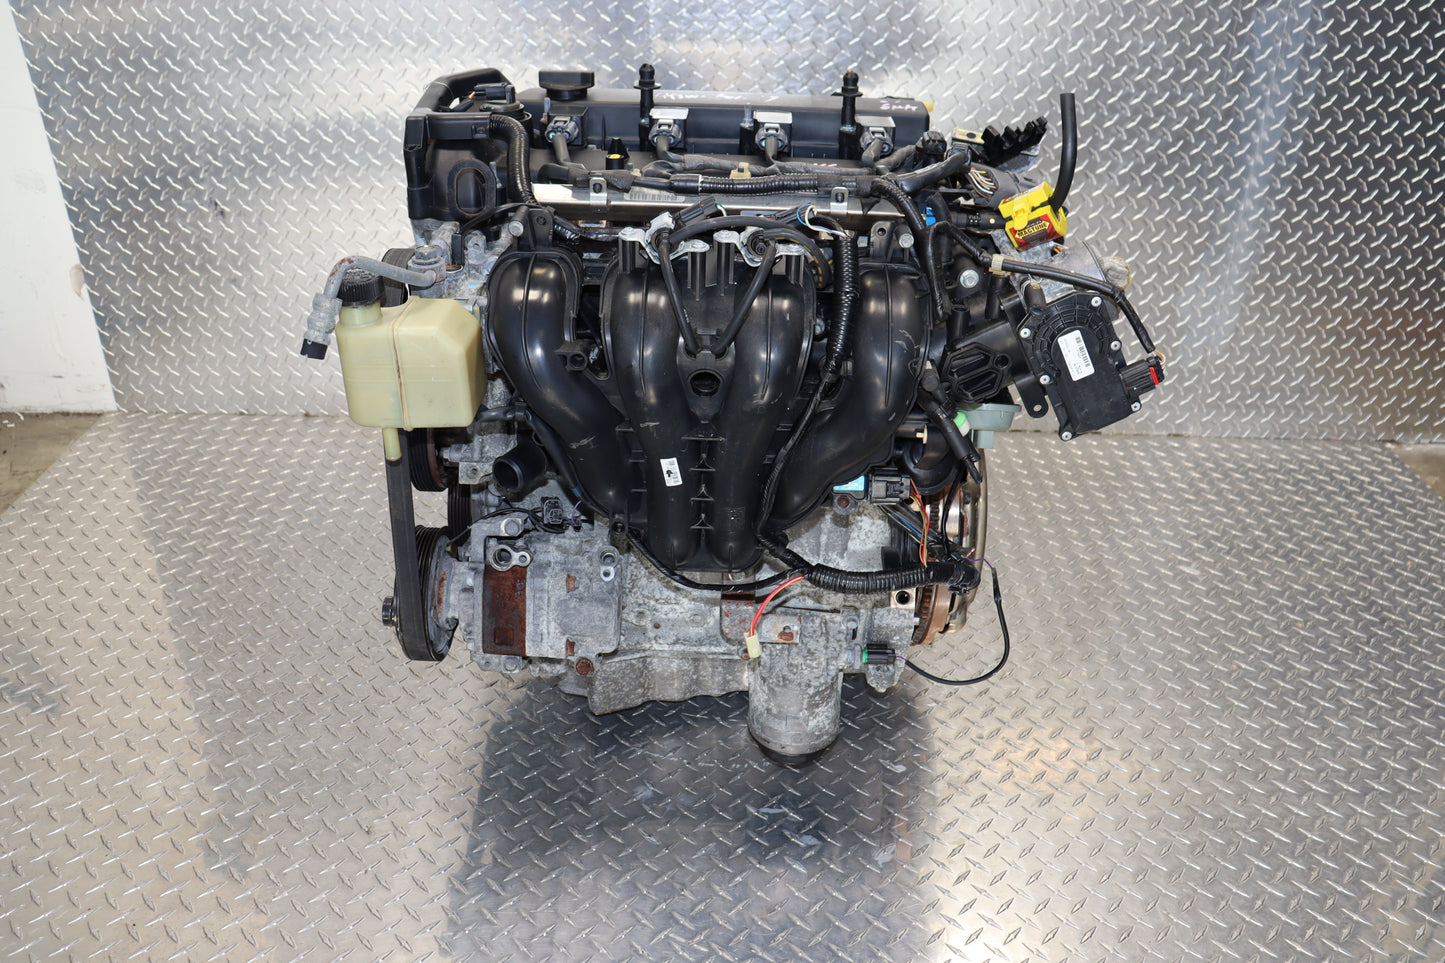 JDM L3-VE 2006 - 2009 MAZDA 6 MOTOR 2.3L 4CYL DOHC ENGINE L3VE